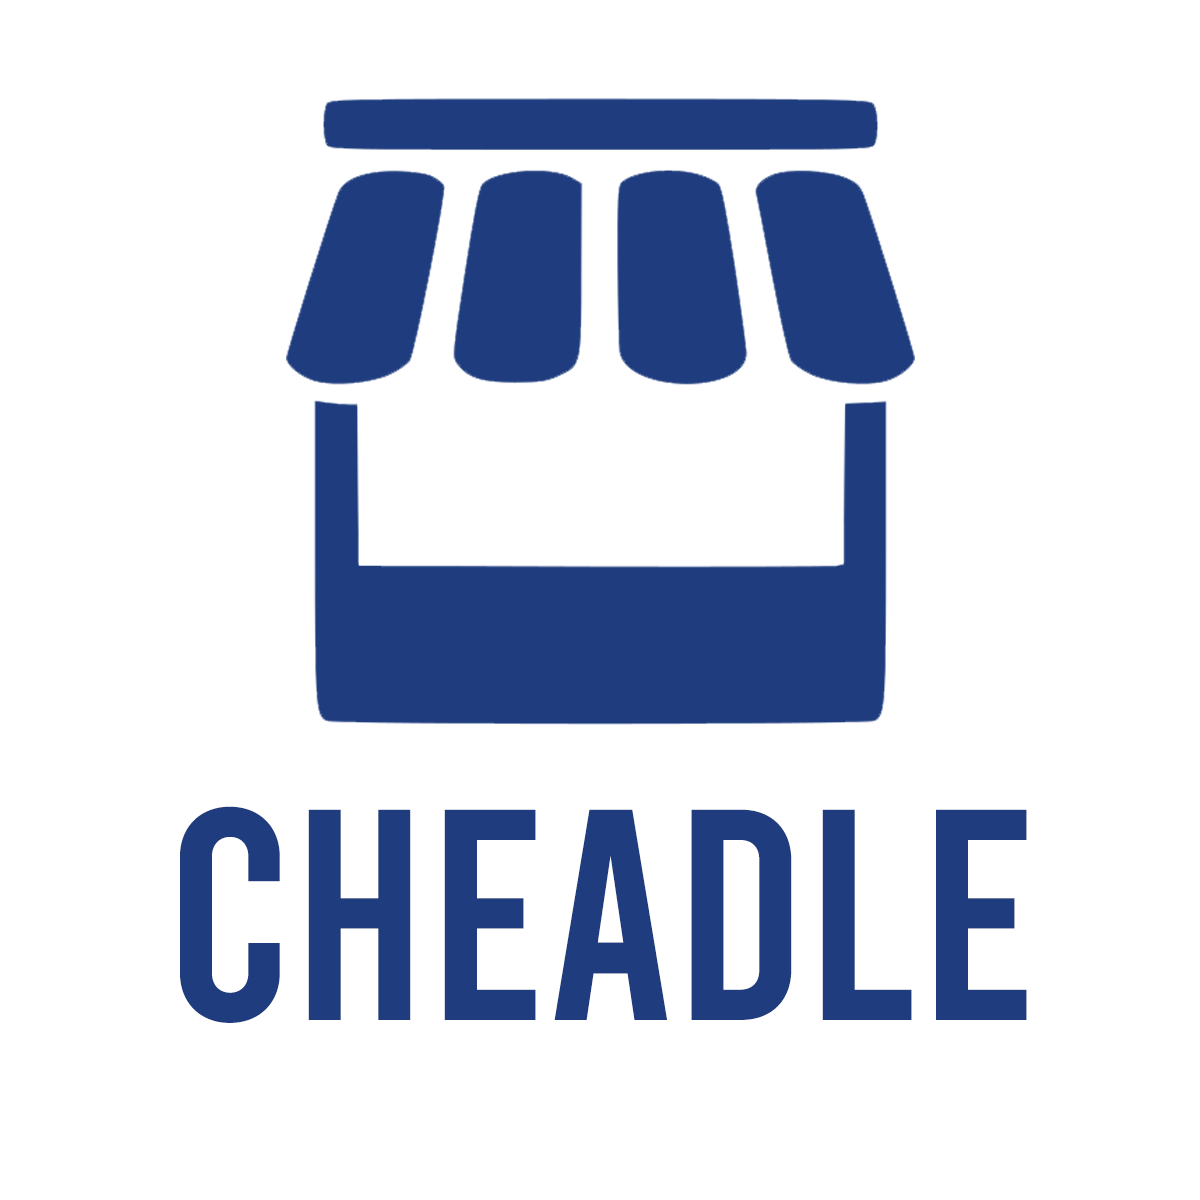 Cheadle Market